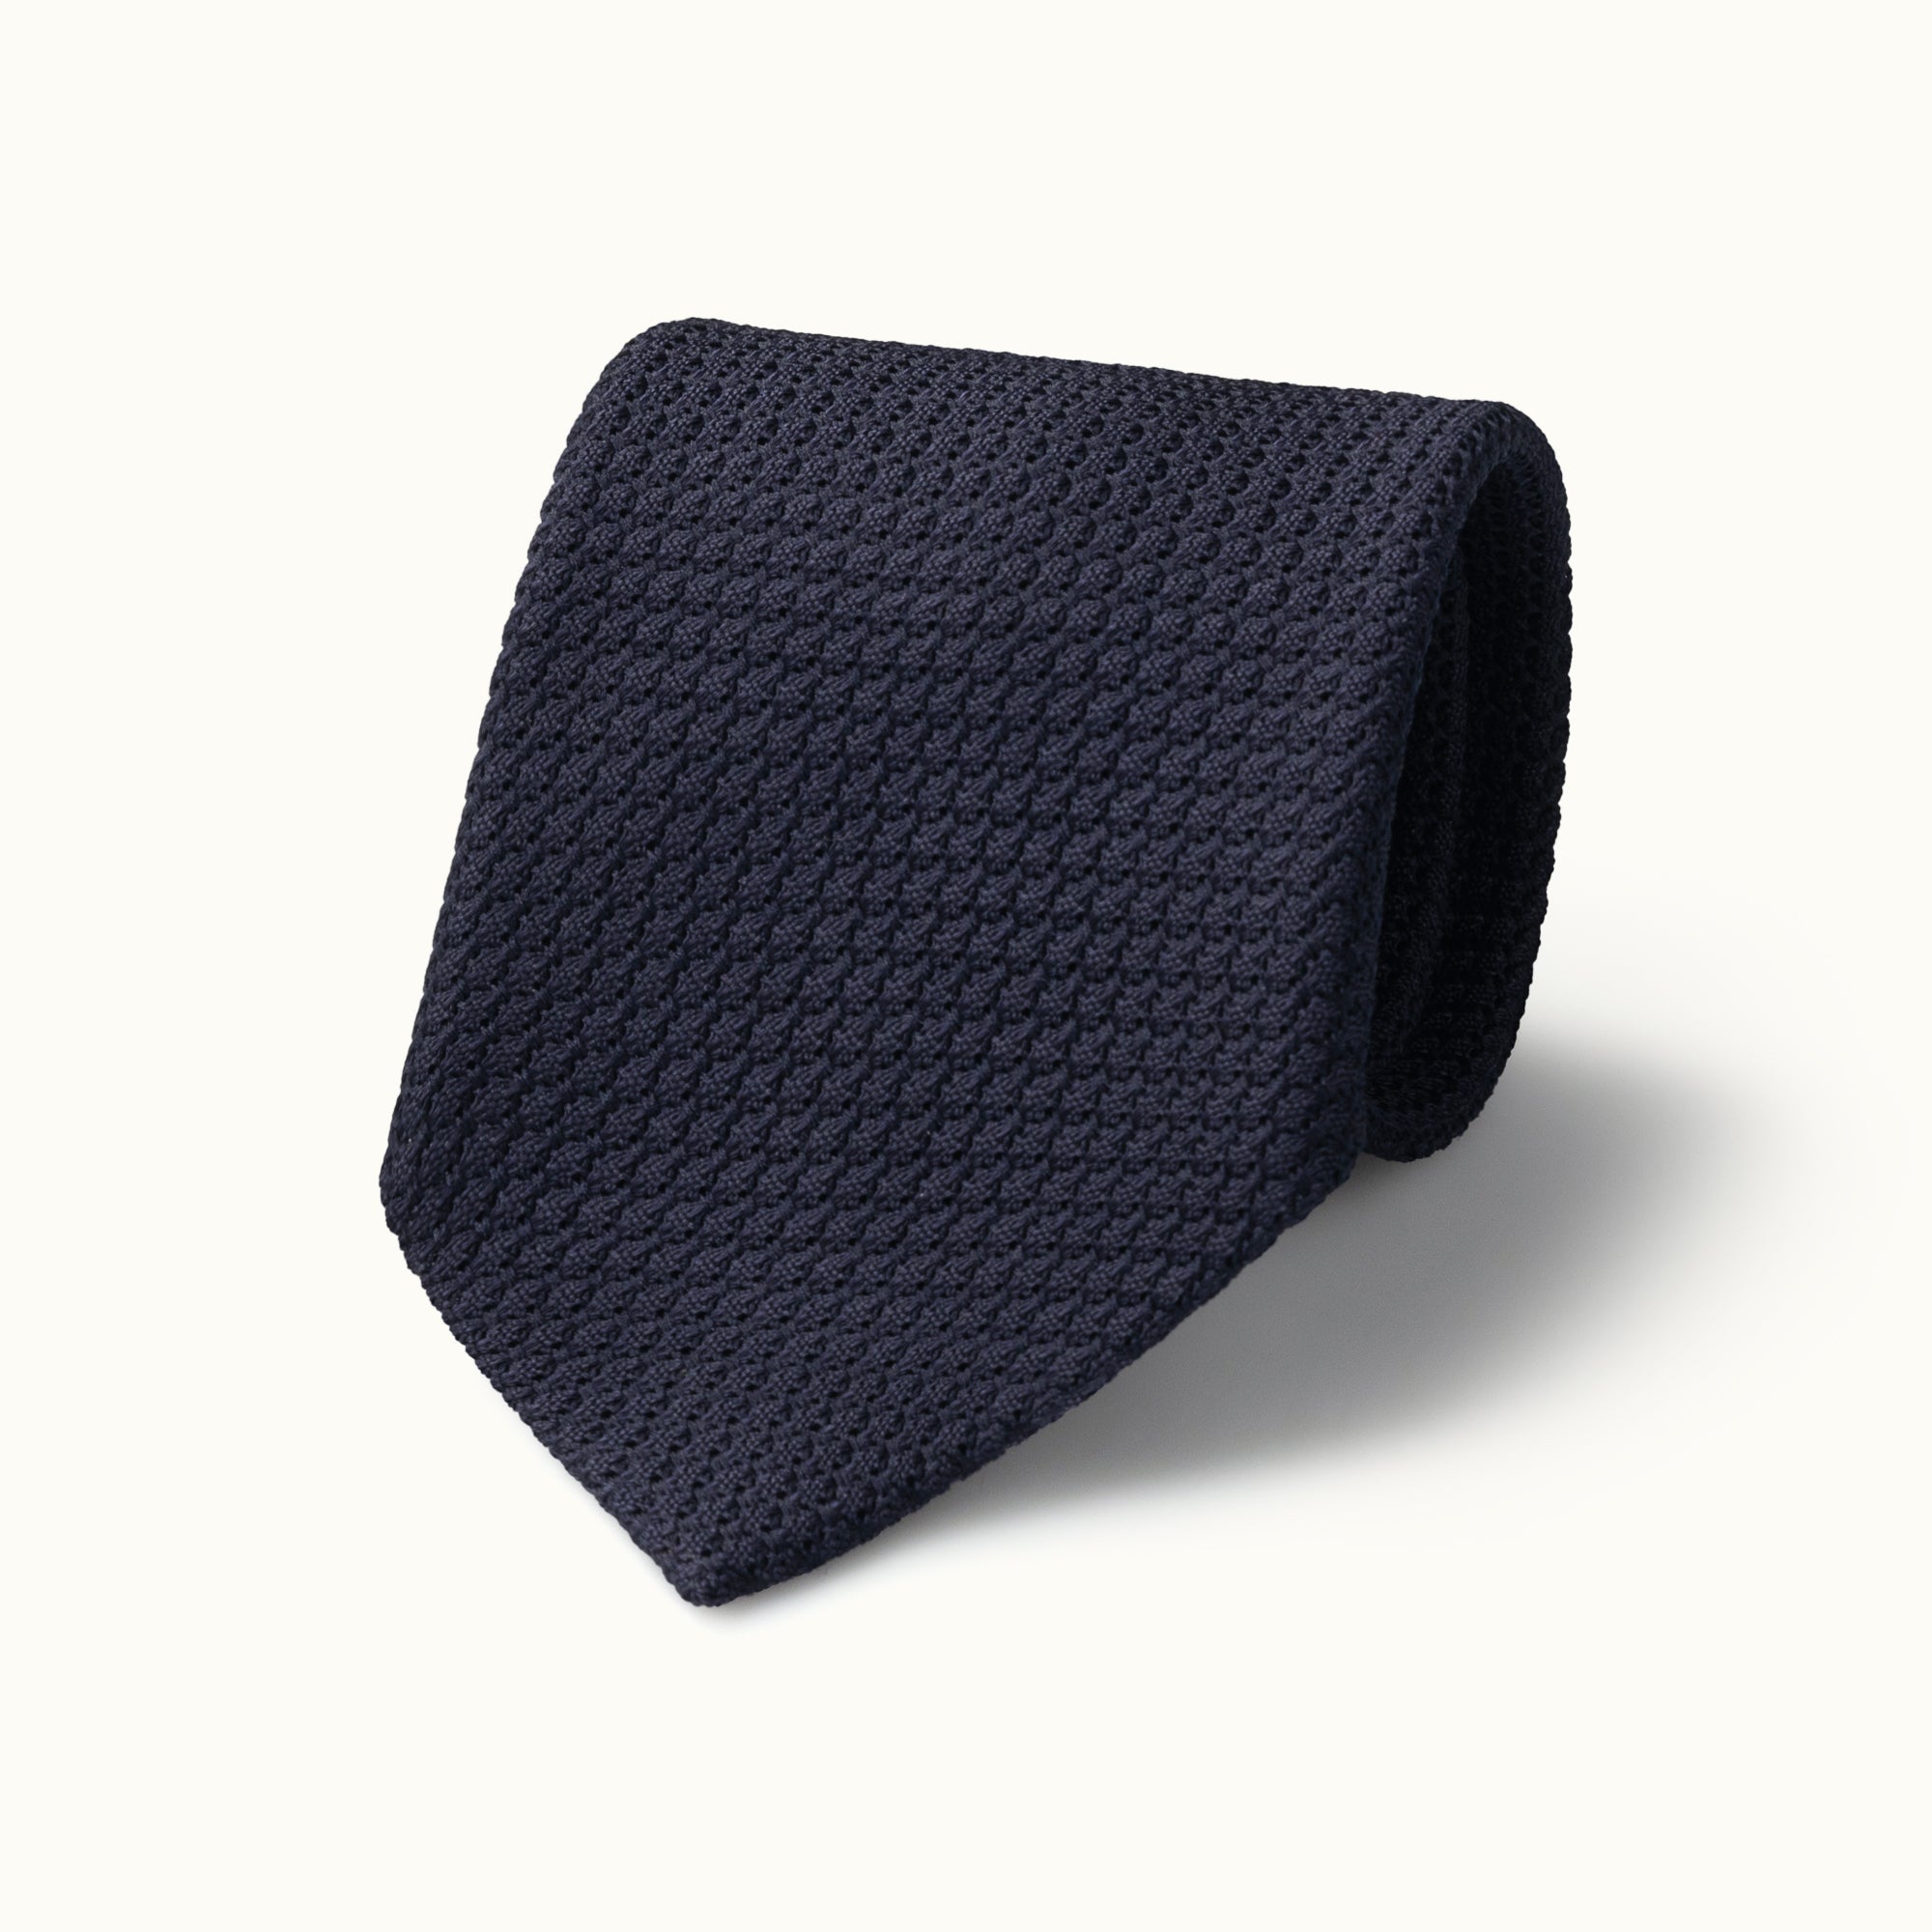 Dark Navy Blue Grenadine Tie